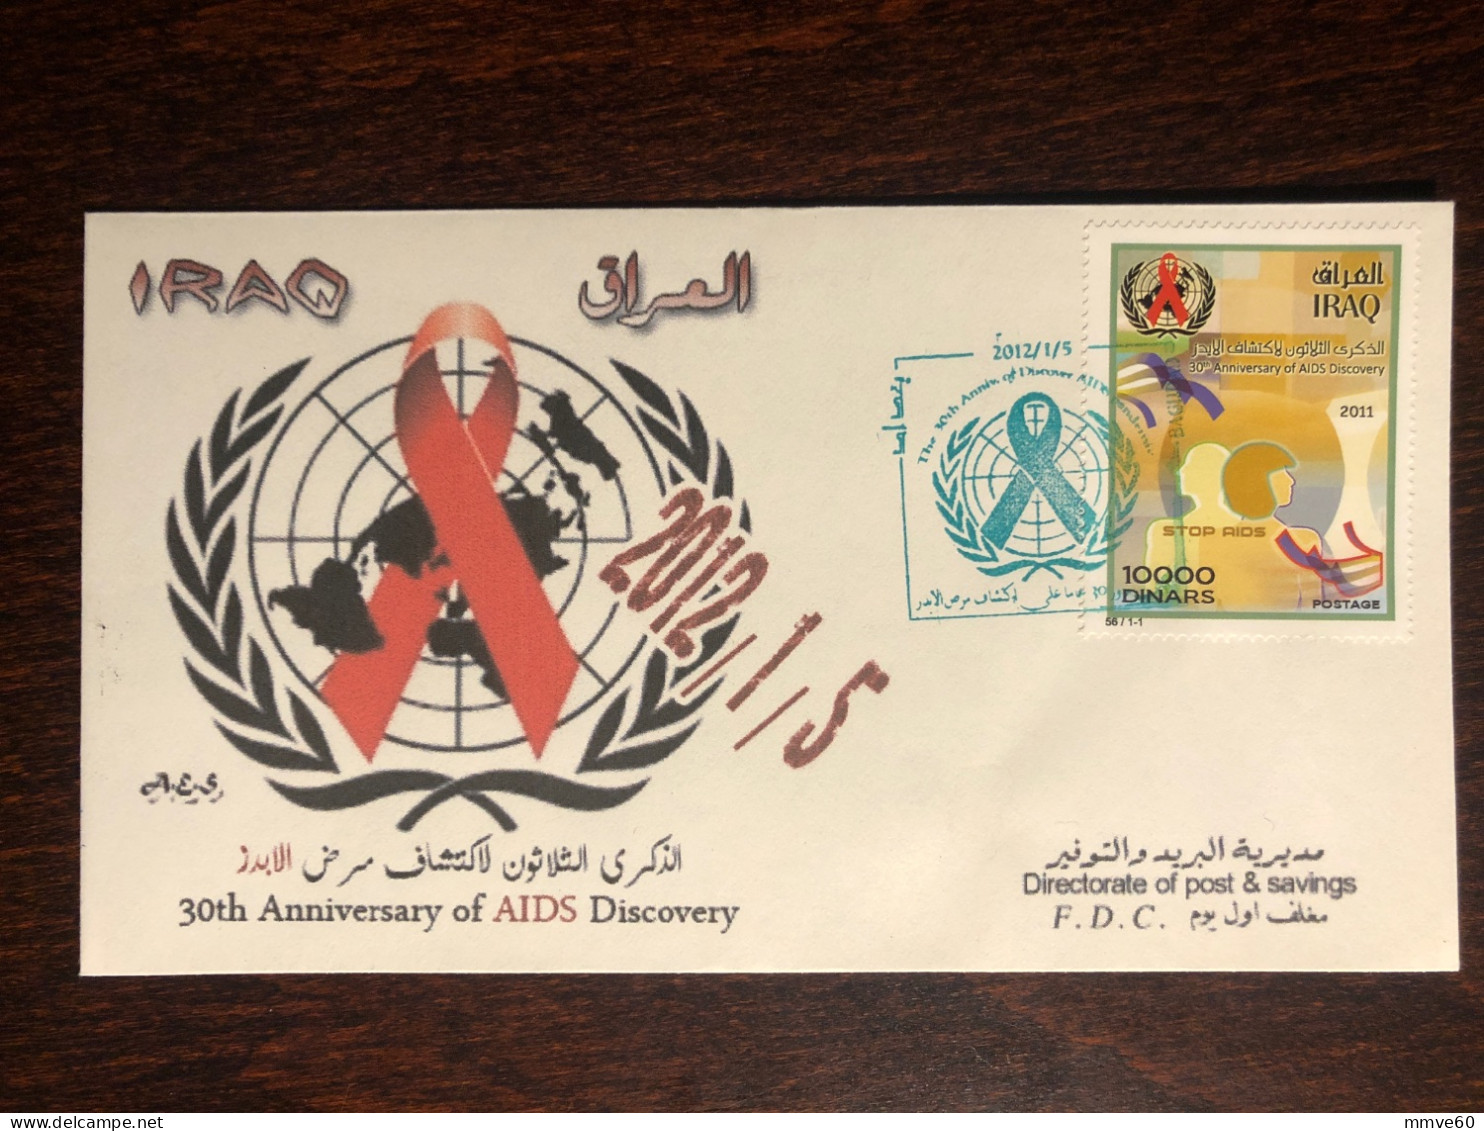 IRAQ FDC COVER 2012 YEAR AIDS SIDA  HEALTH MEDICINE STAMPS - Iraq